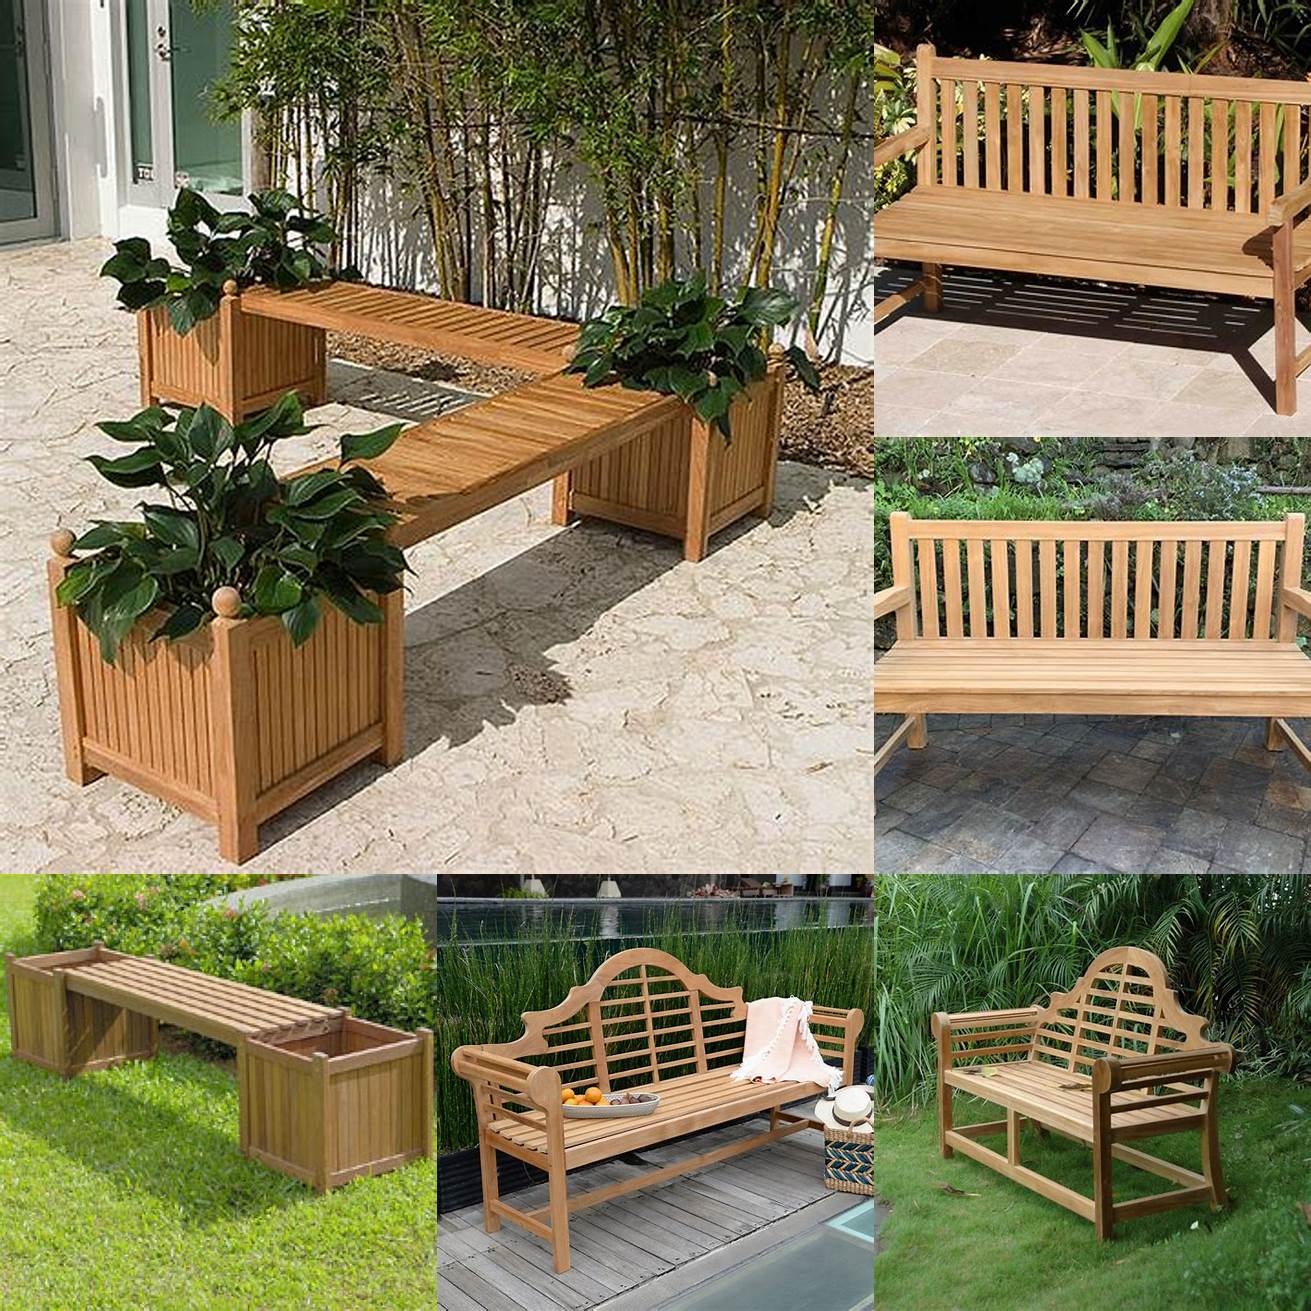 A teak outdoor bench with a planter box